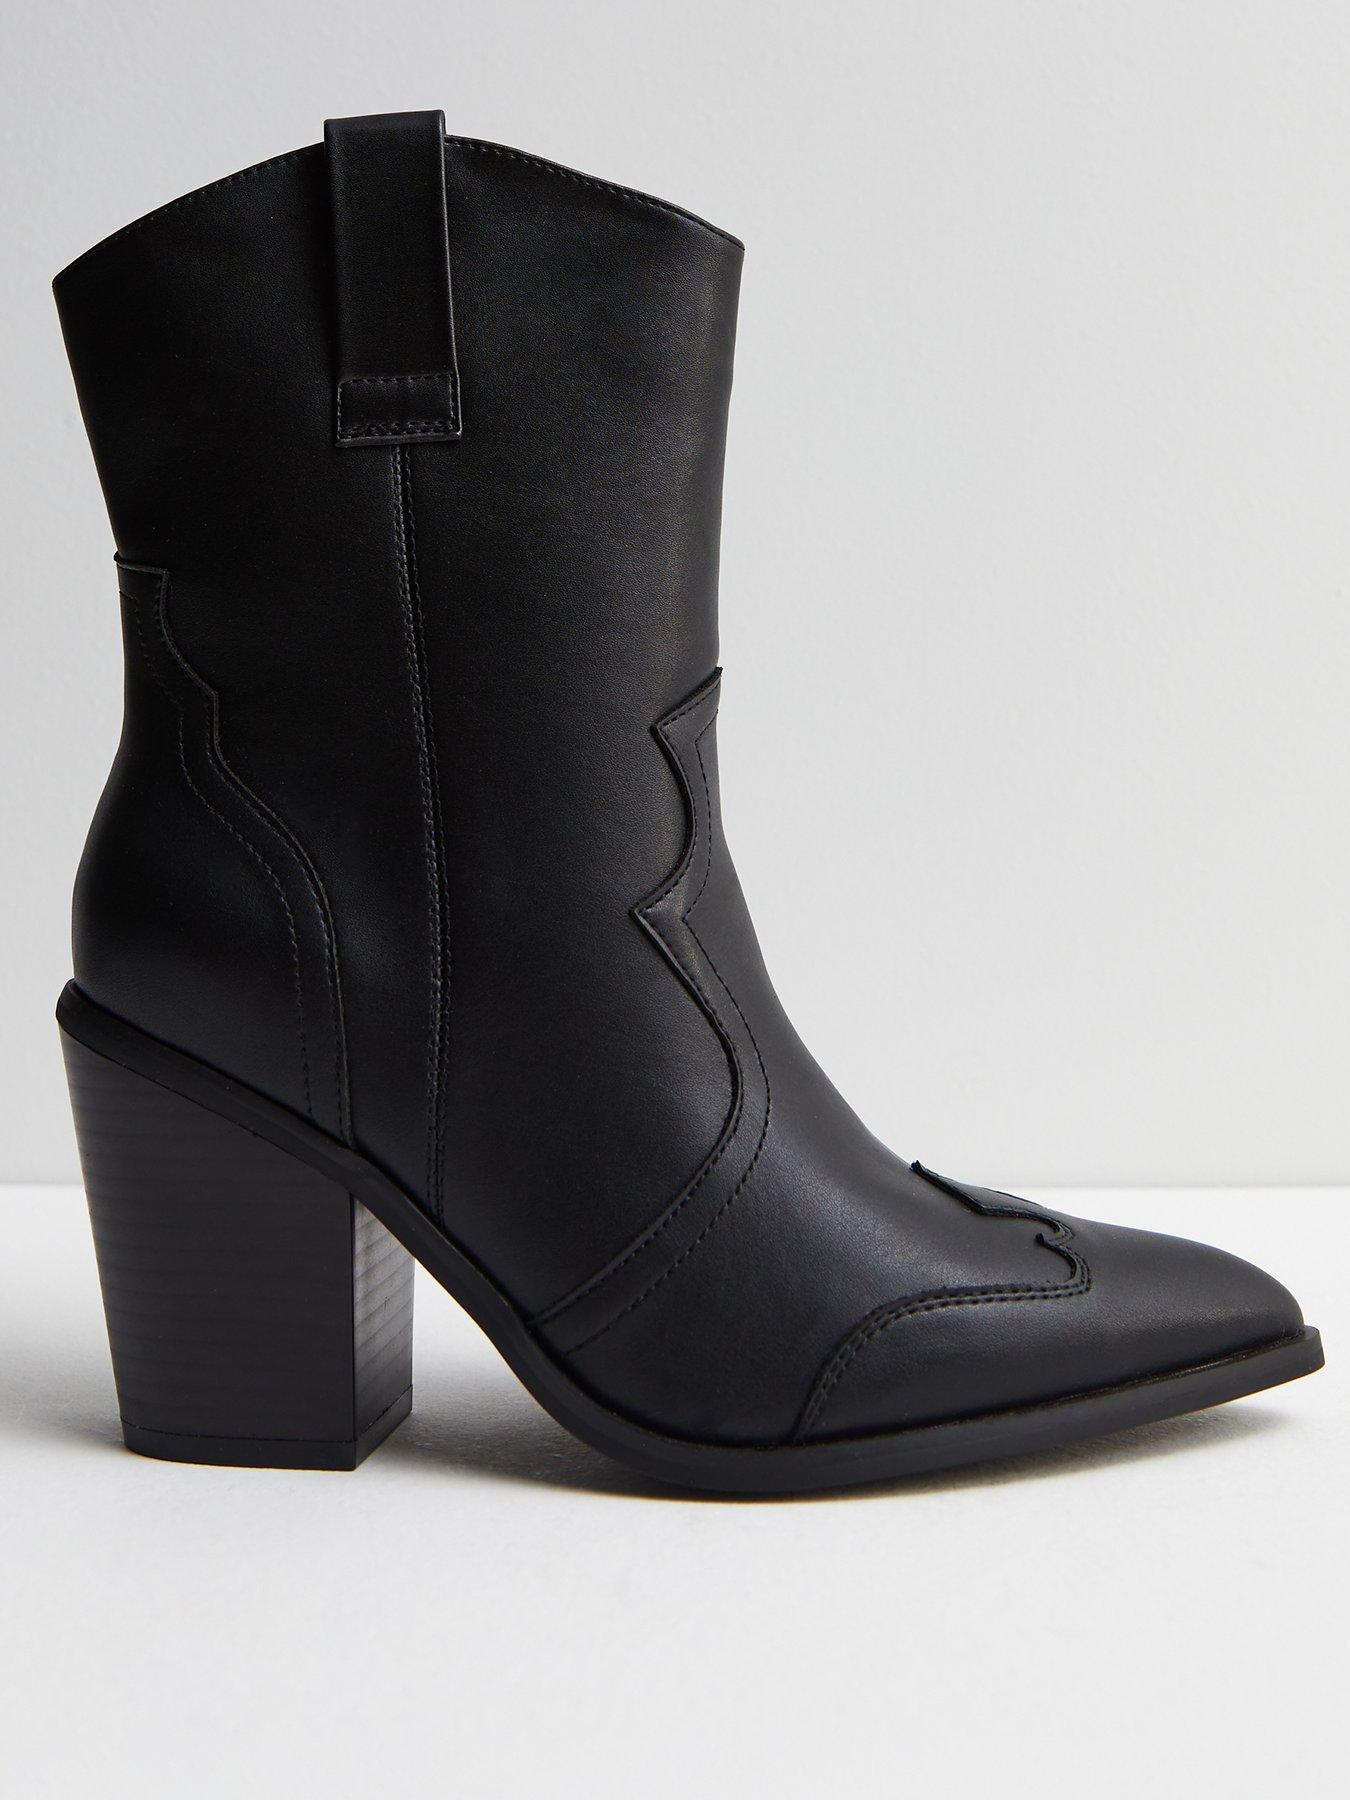 British style mens fashion party nightclub dress platform boots black white  shoes cowboy genuine leather boot